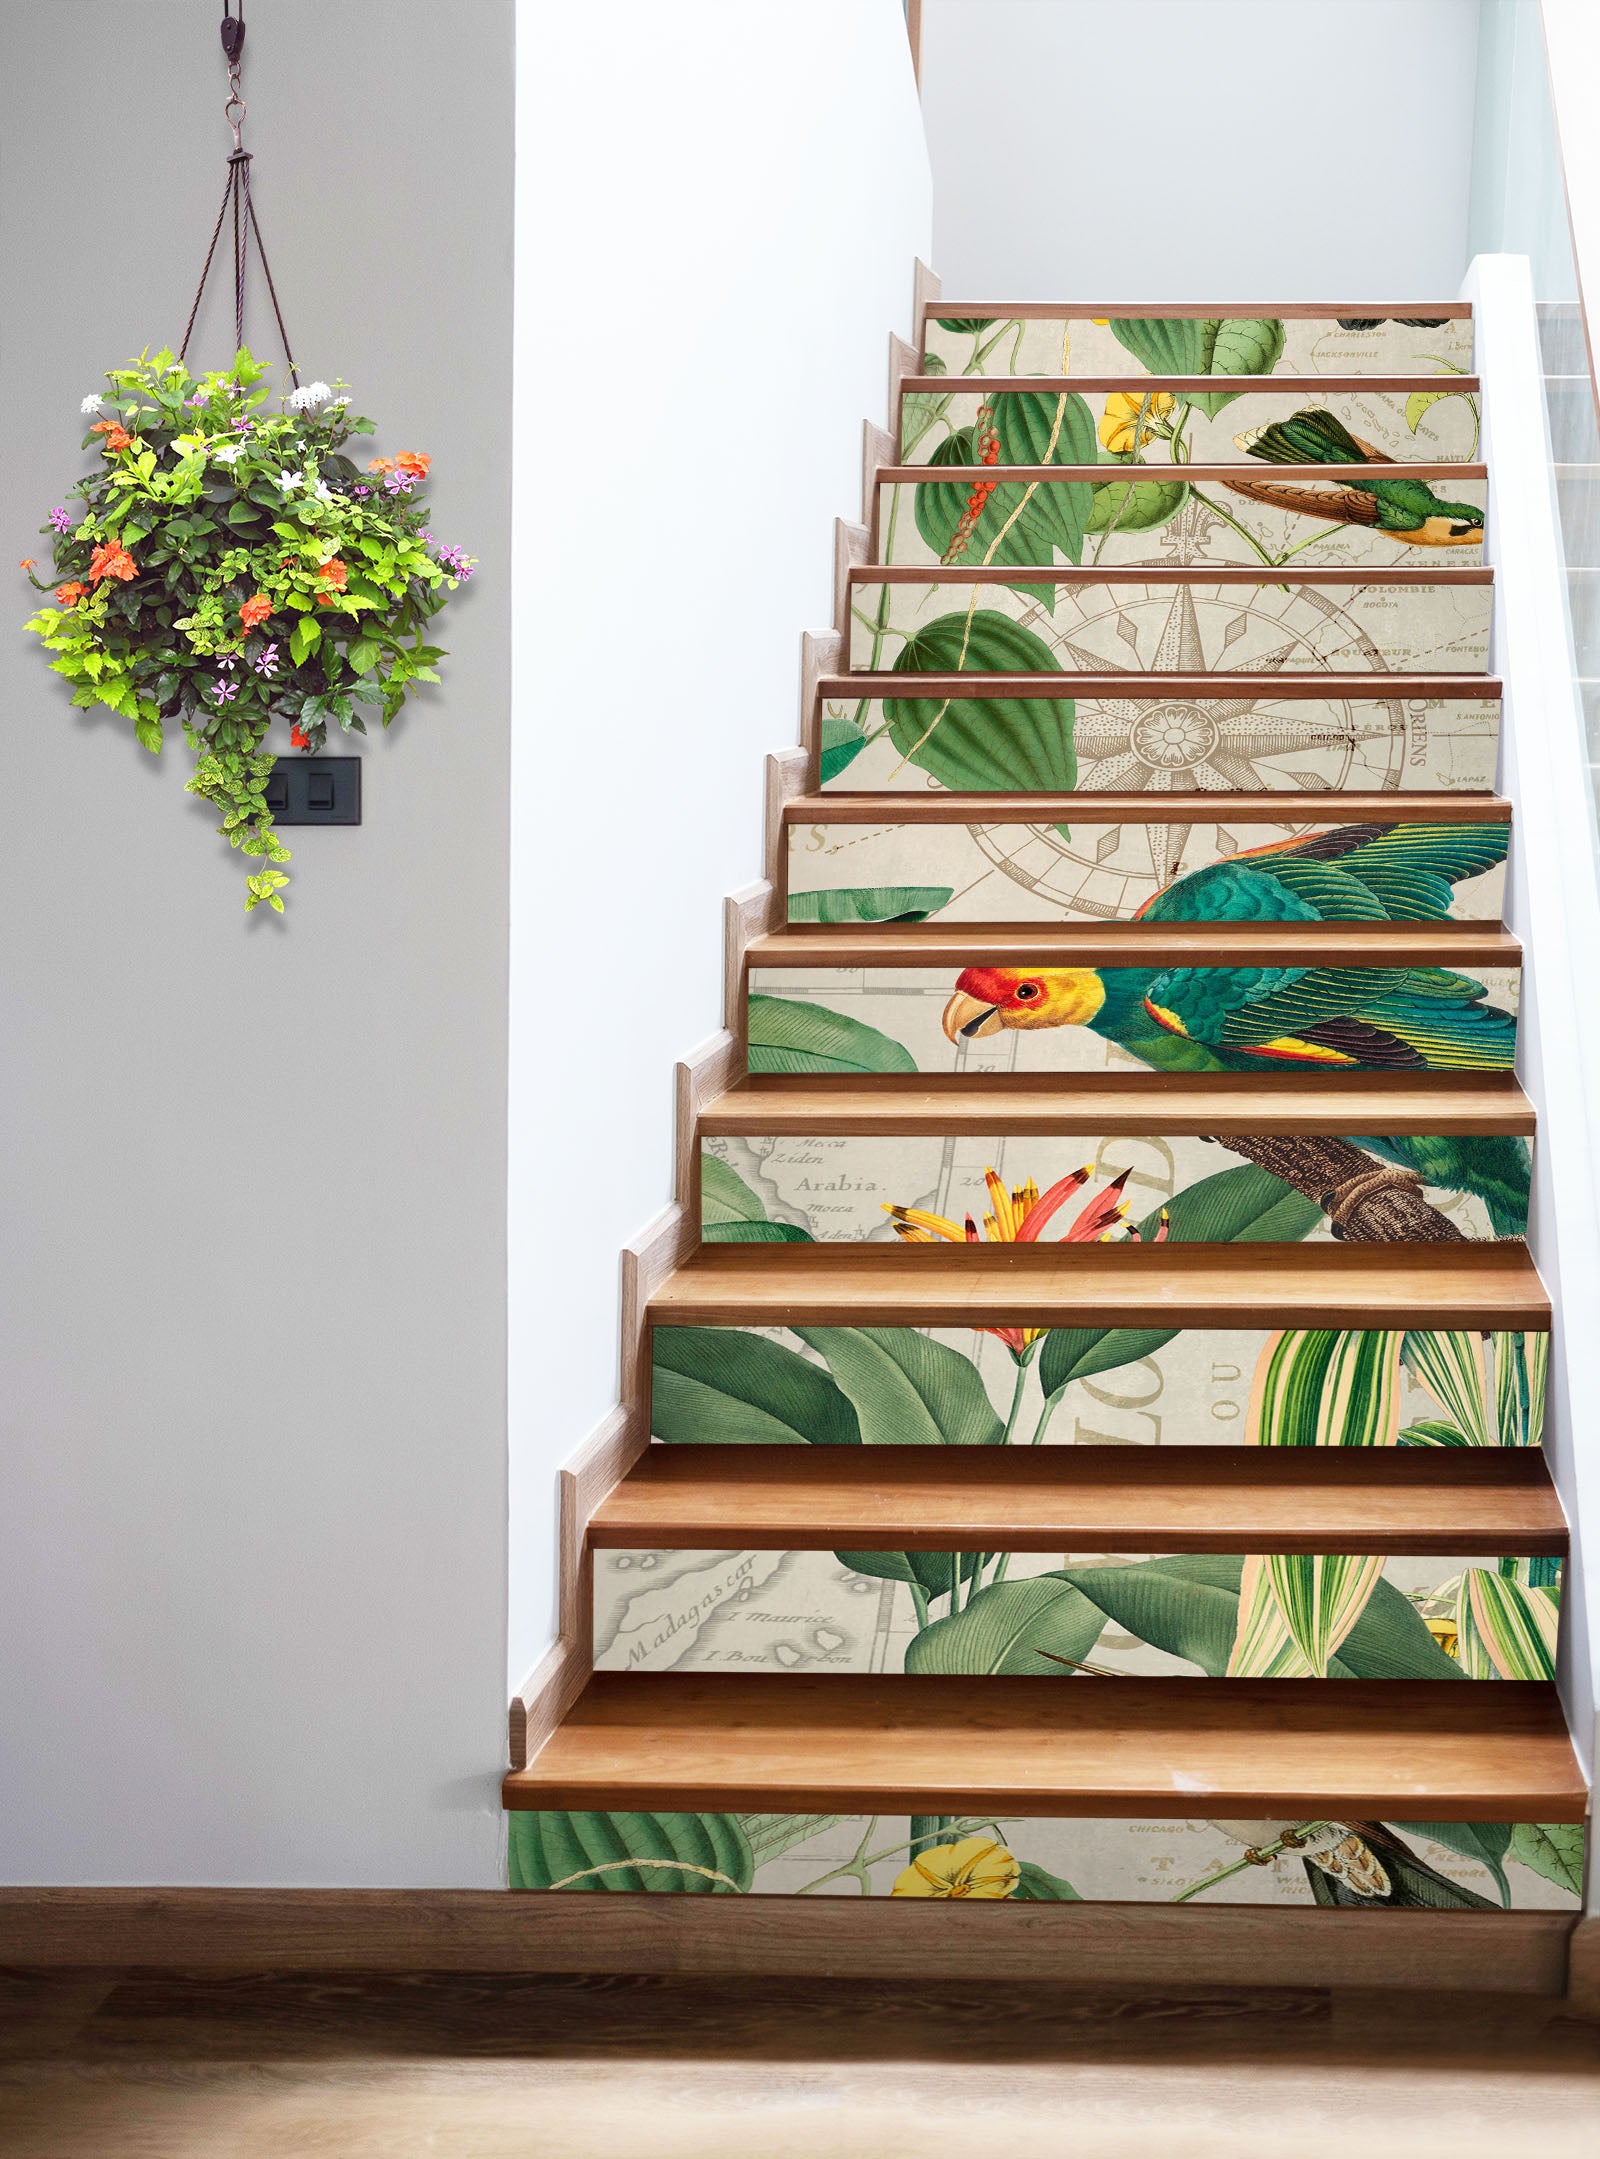 3D Flower Bush Parrot 11020 Andrea Haase Stair Risers